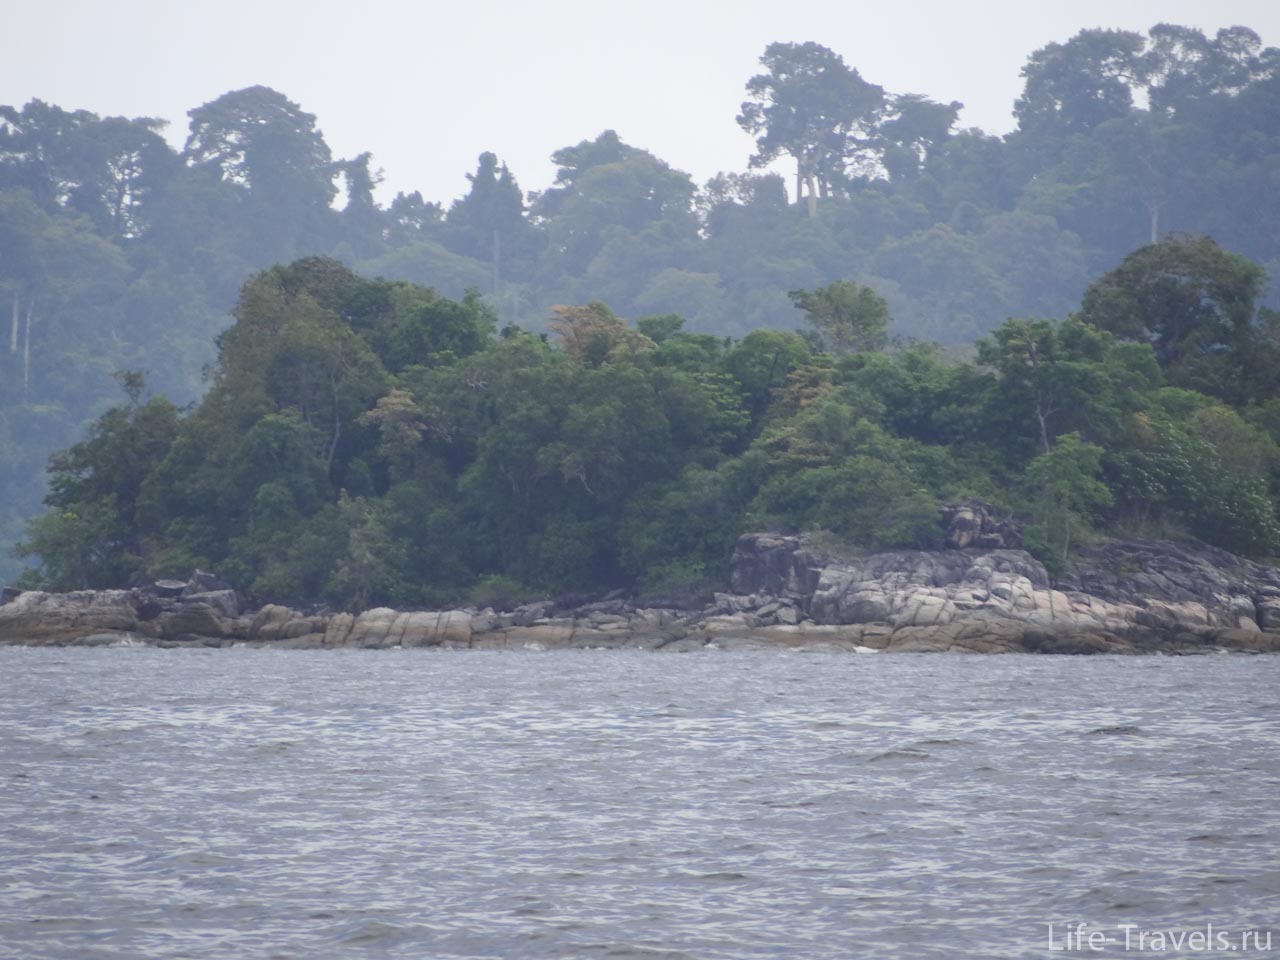 Uninhabited island in the Andaman Sea